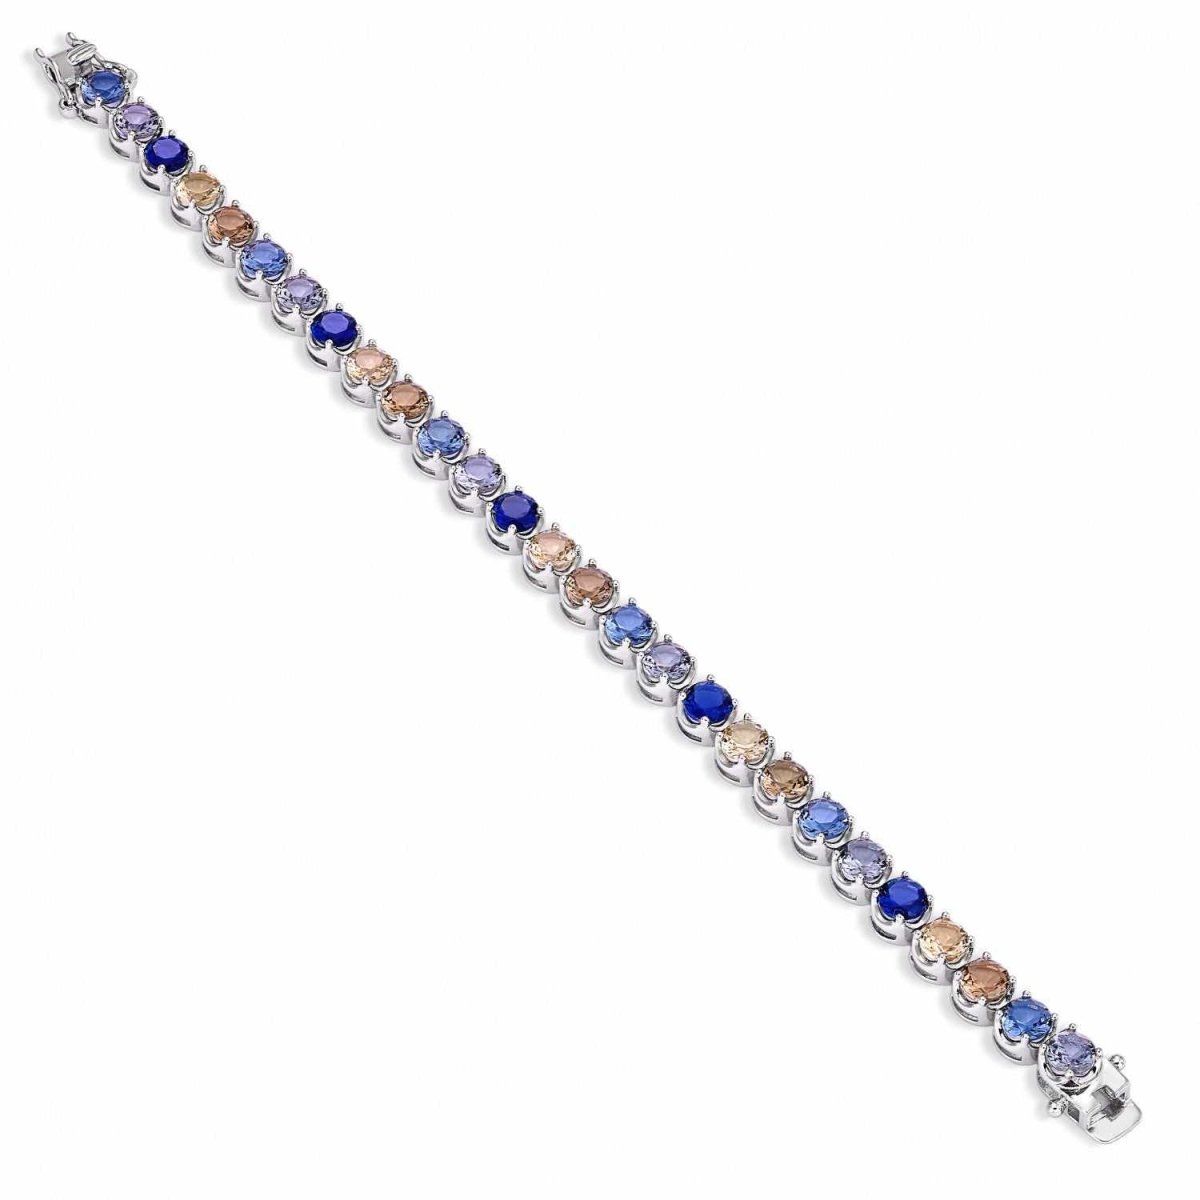 Bracelet - Bracelets with round-cut stones in cool tones